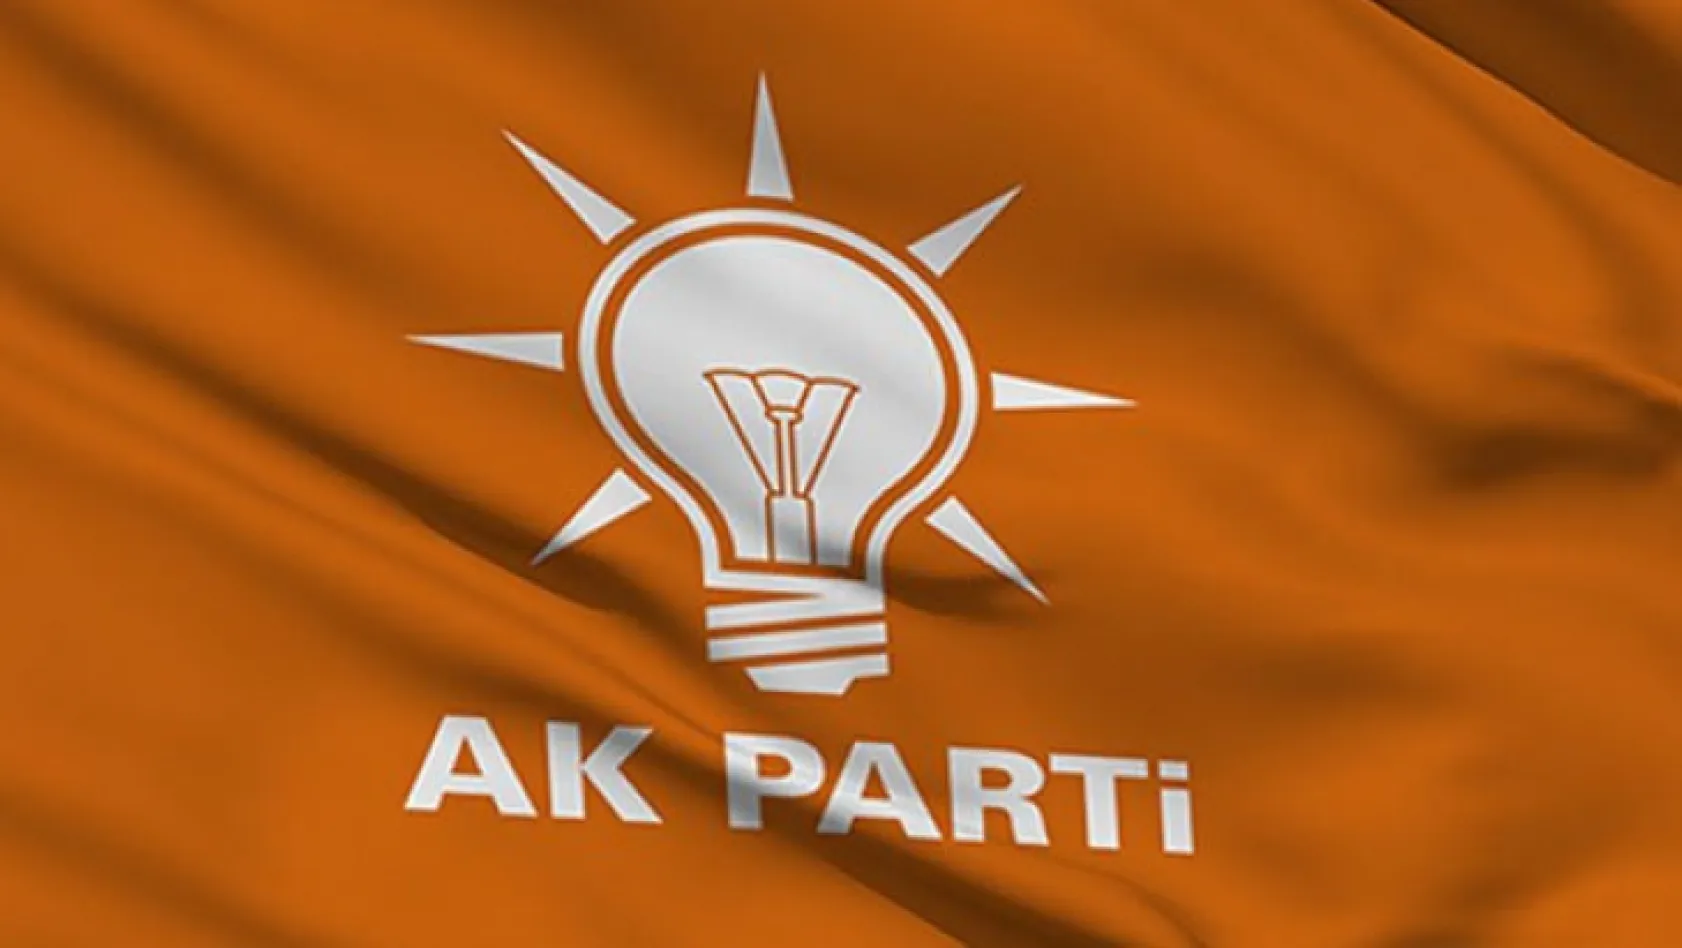 AK Parti'den referandum için tarih